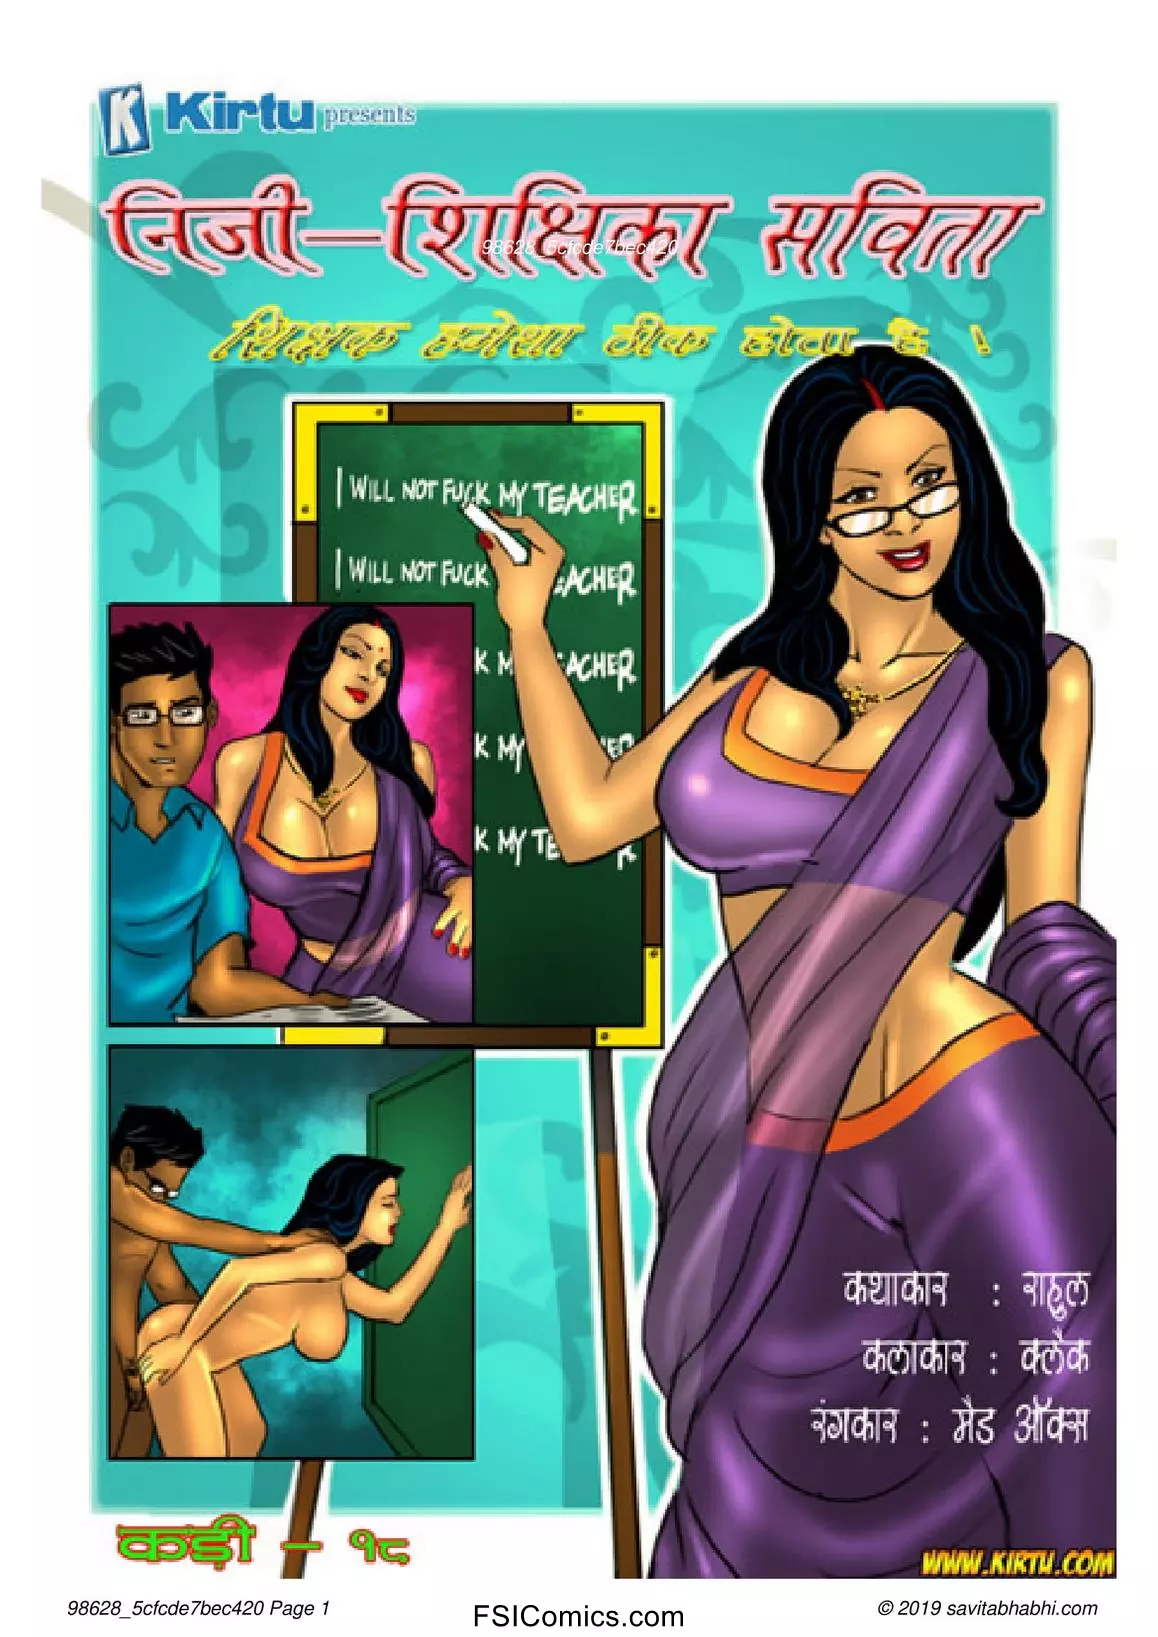 Savita Bhabhi Episode 18 Hindi – Niji Shikshika Savita (निजी शिक्षिका सविता) - 3 - FSIComics